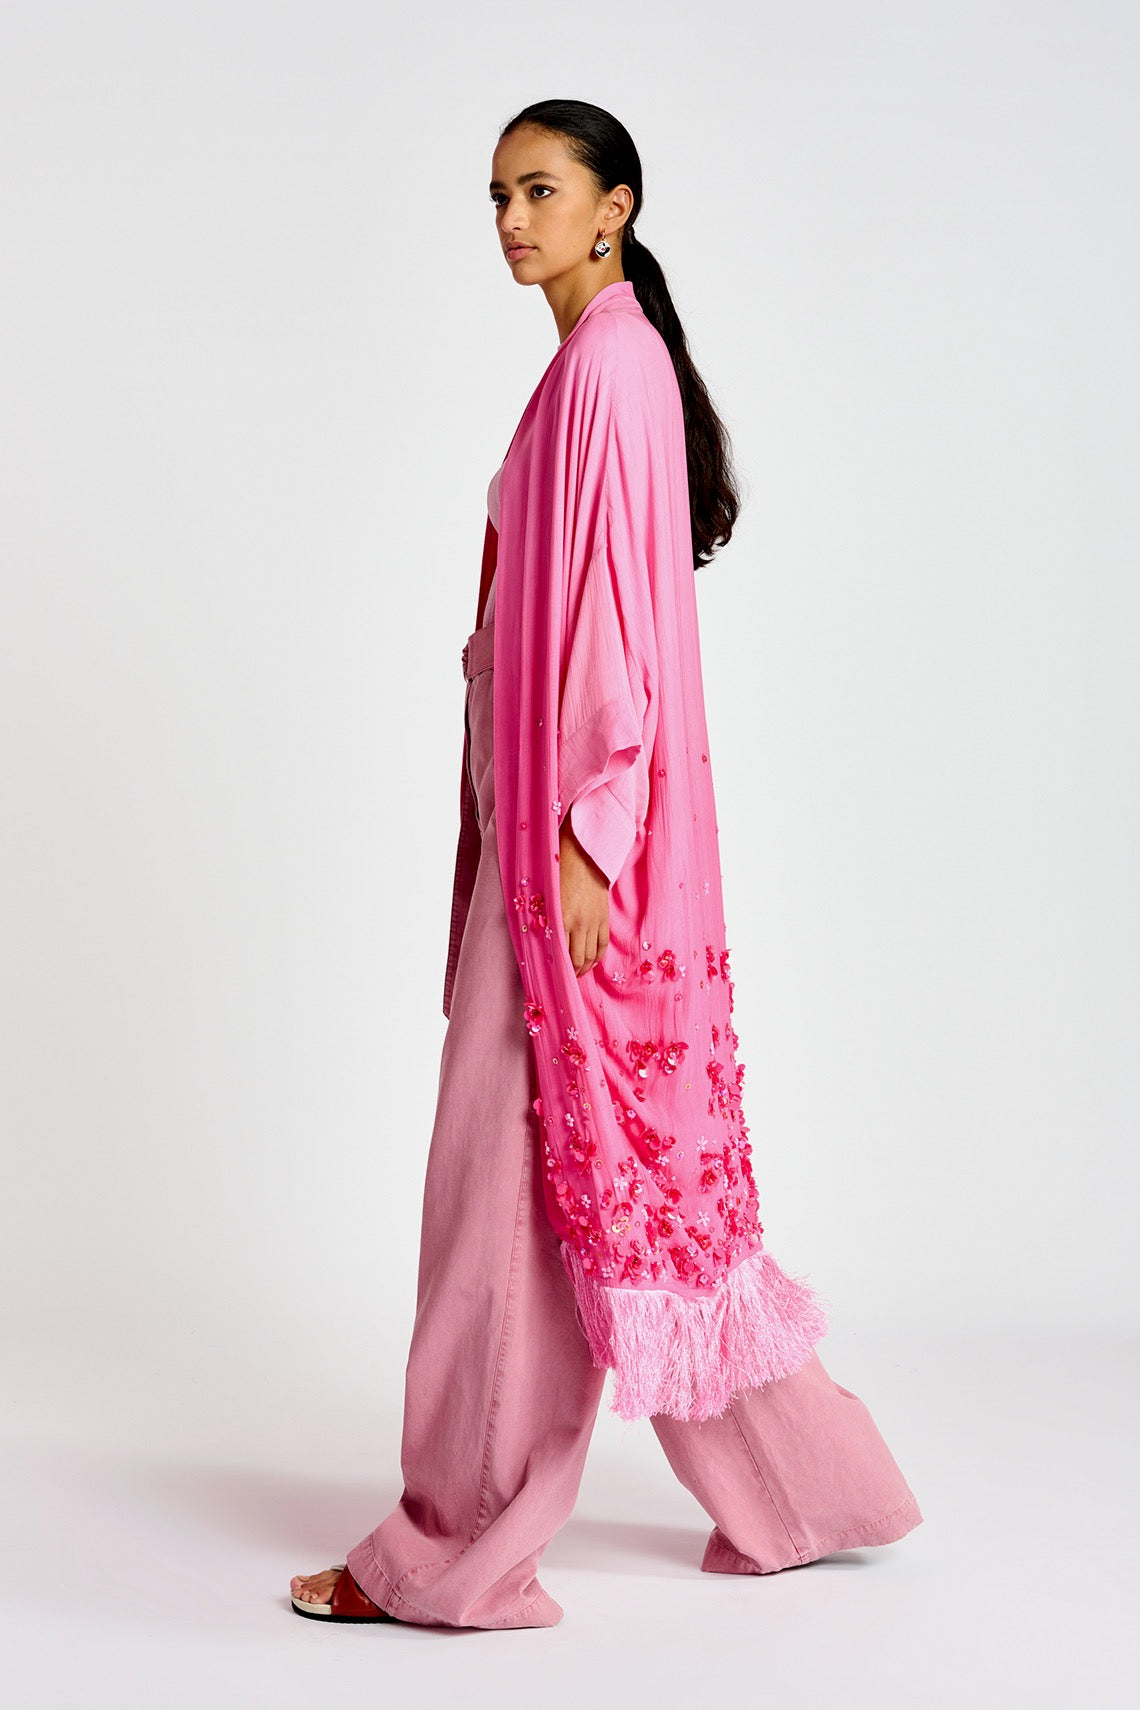 Essentiel Antwerp- Bocktail Ombre Sequin Kimono: Pink Cheeks